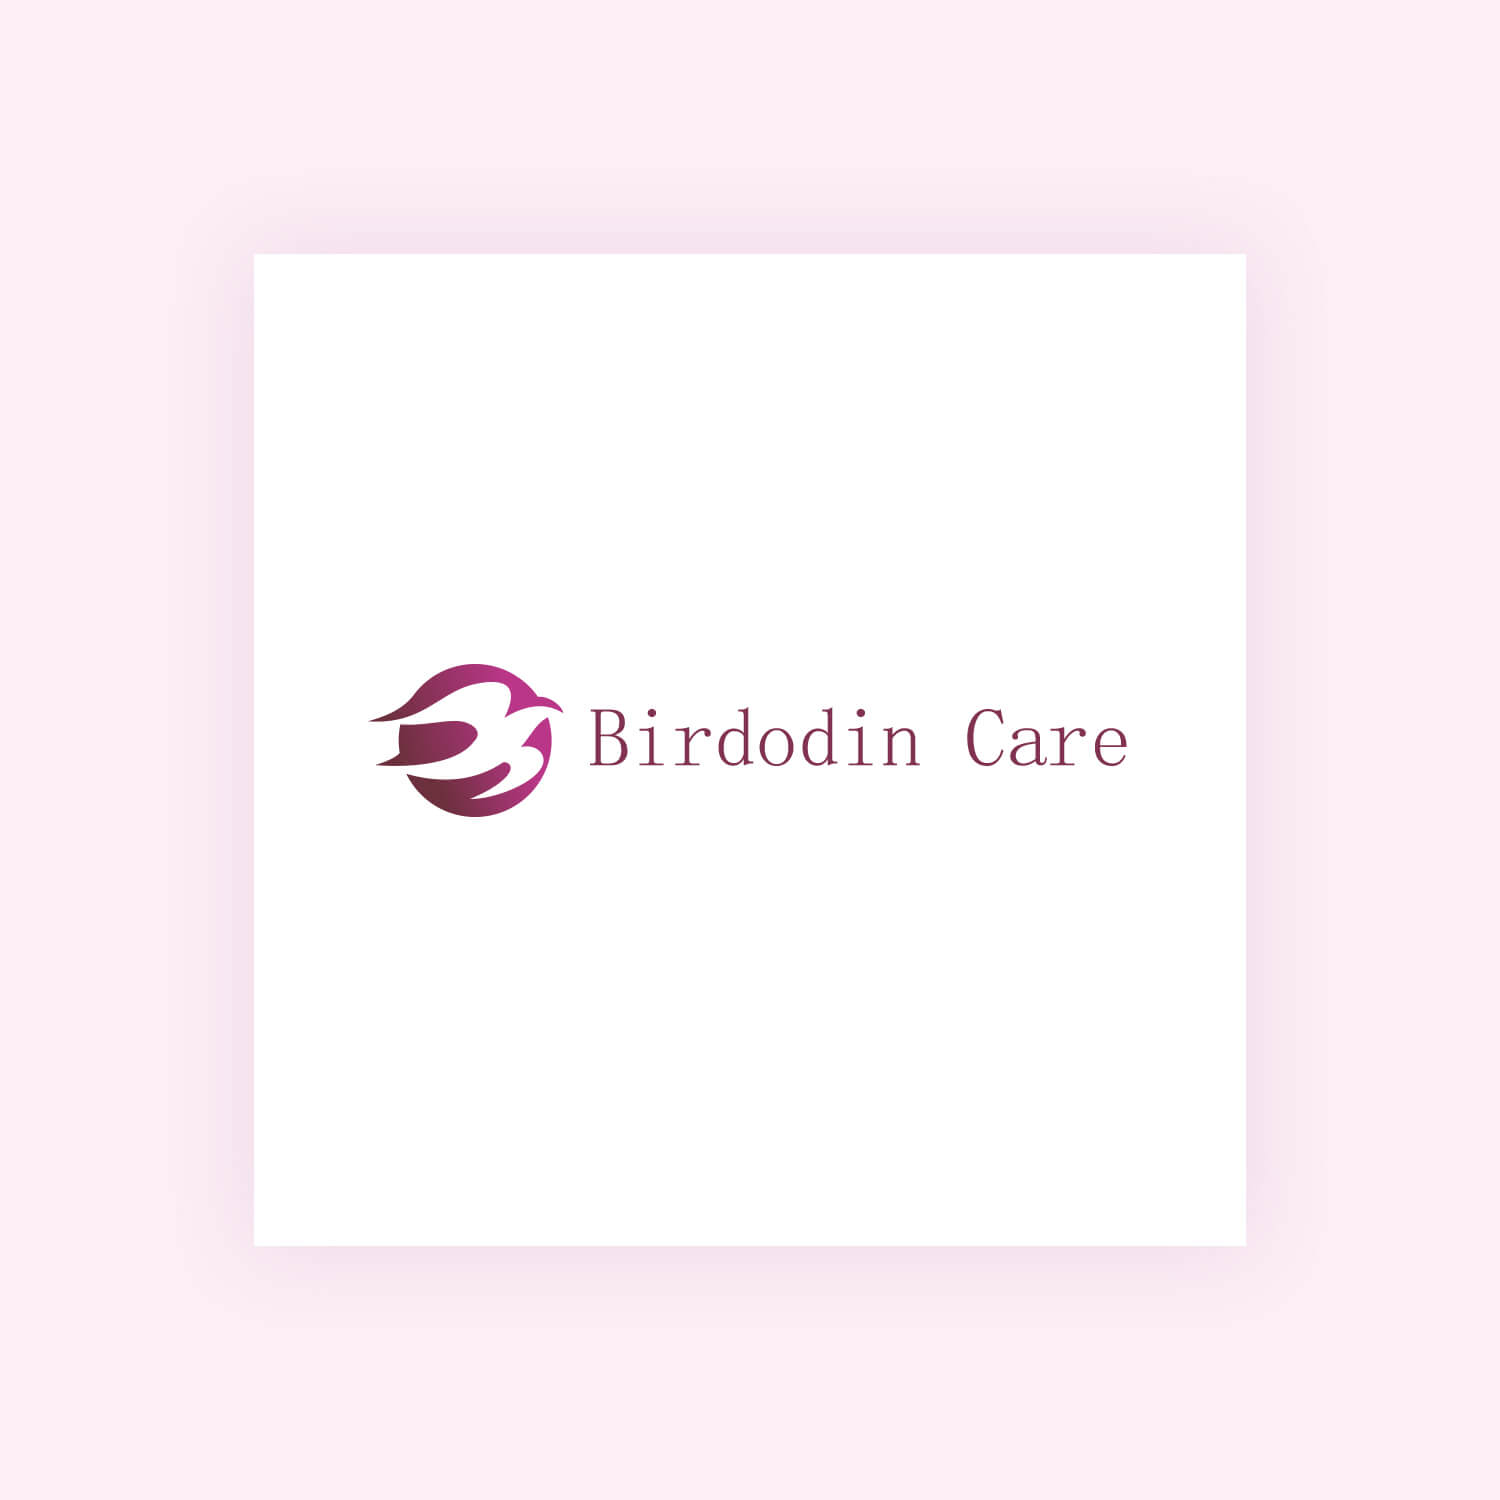 Birdodin Care – Logo design